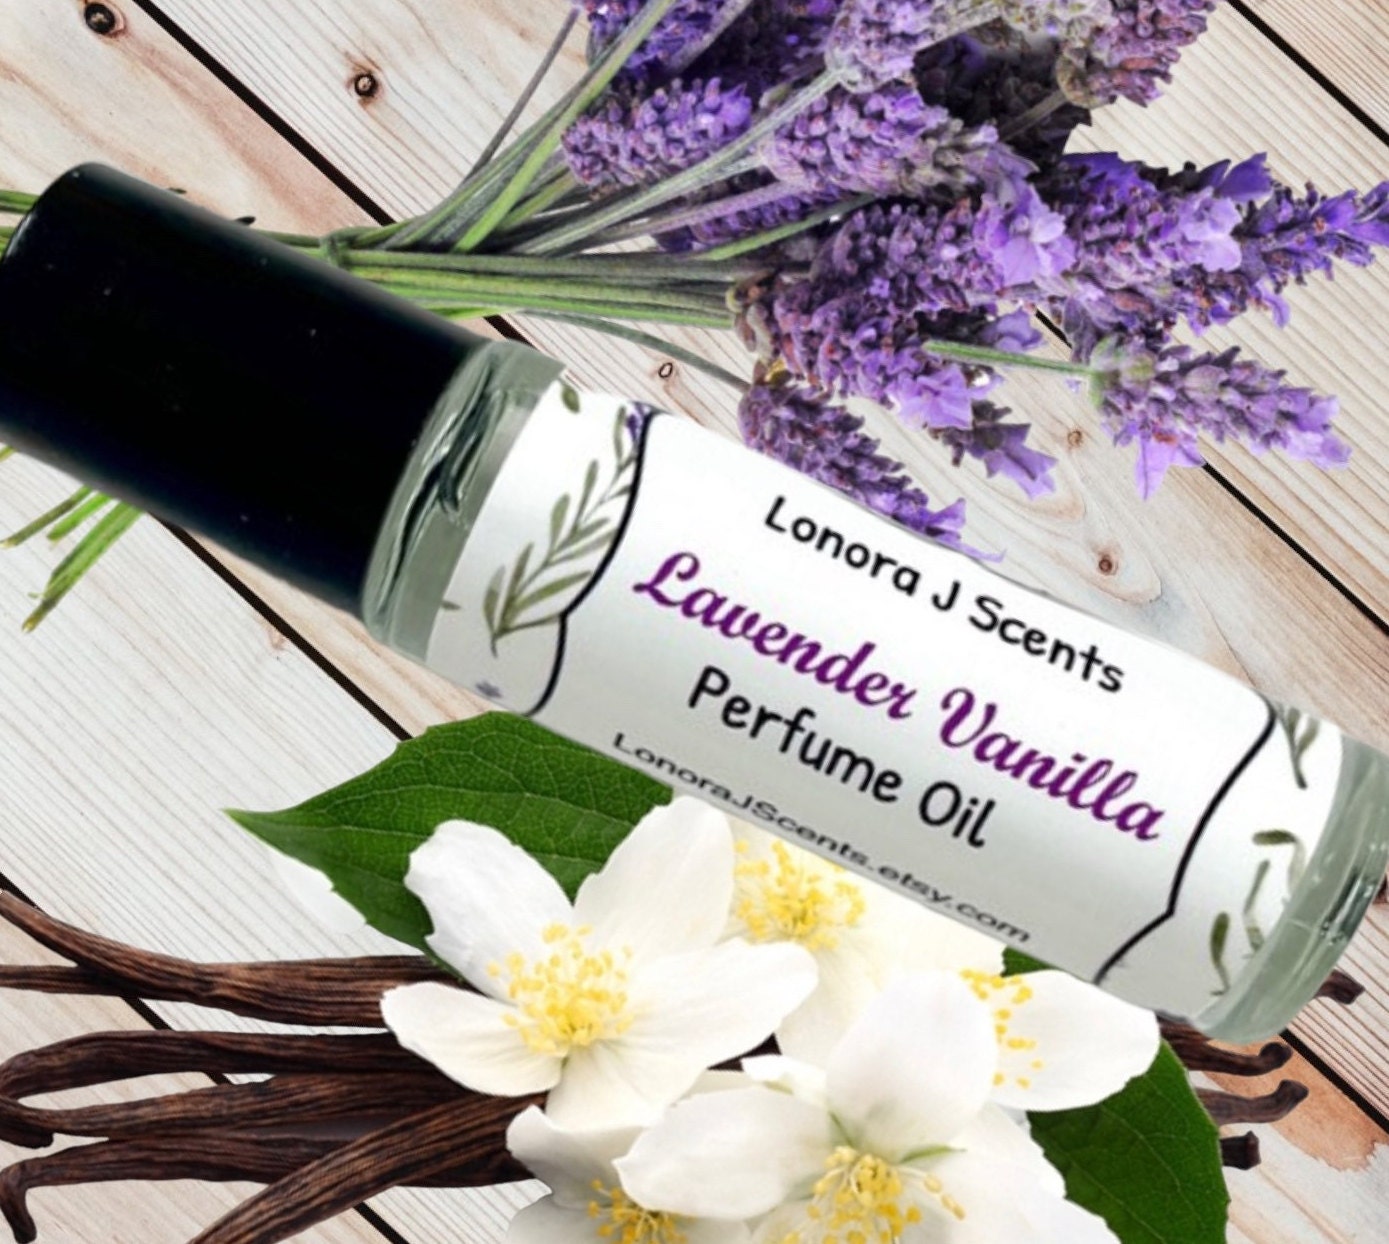 Downy Lavender and Vanilla Fragrance Oil